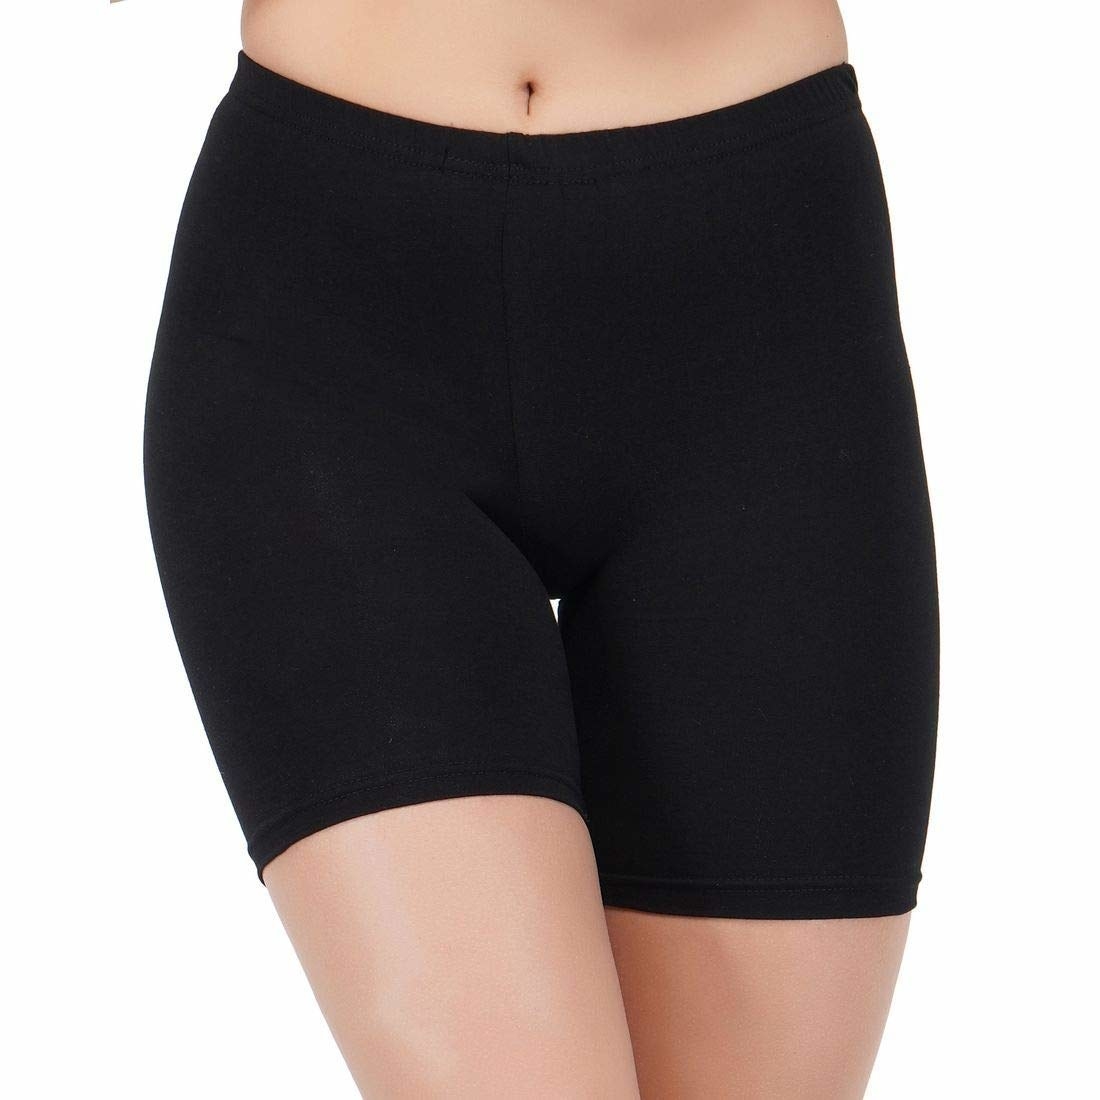 Lower body of a woman wearing black cycling shorts